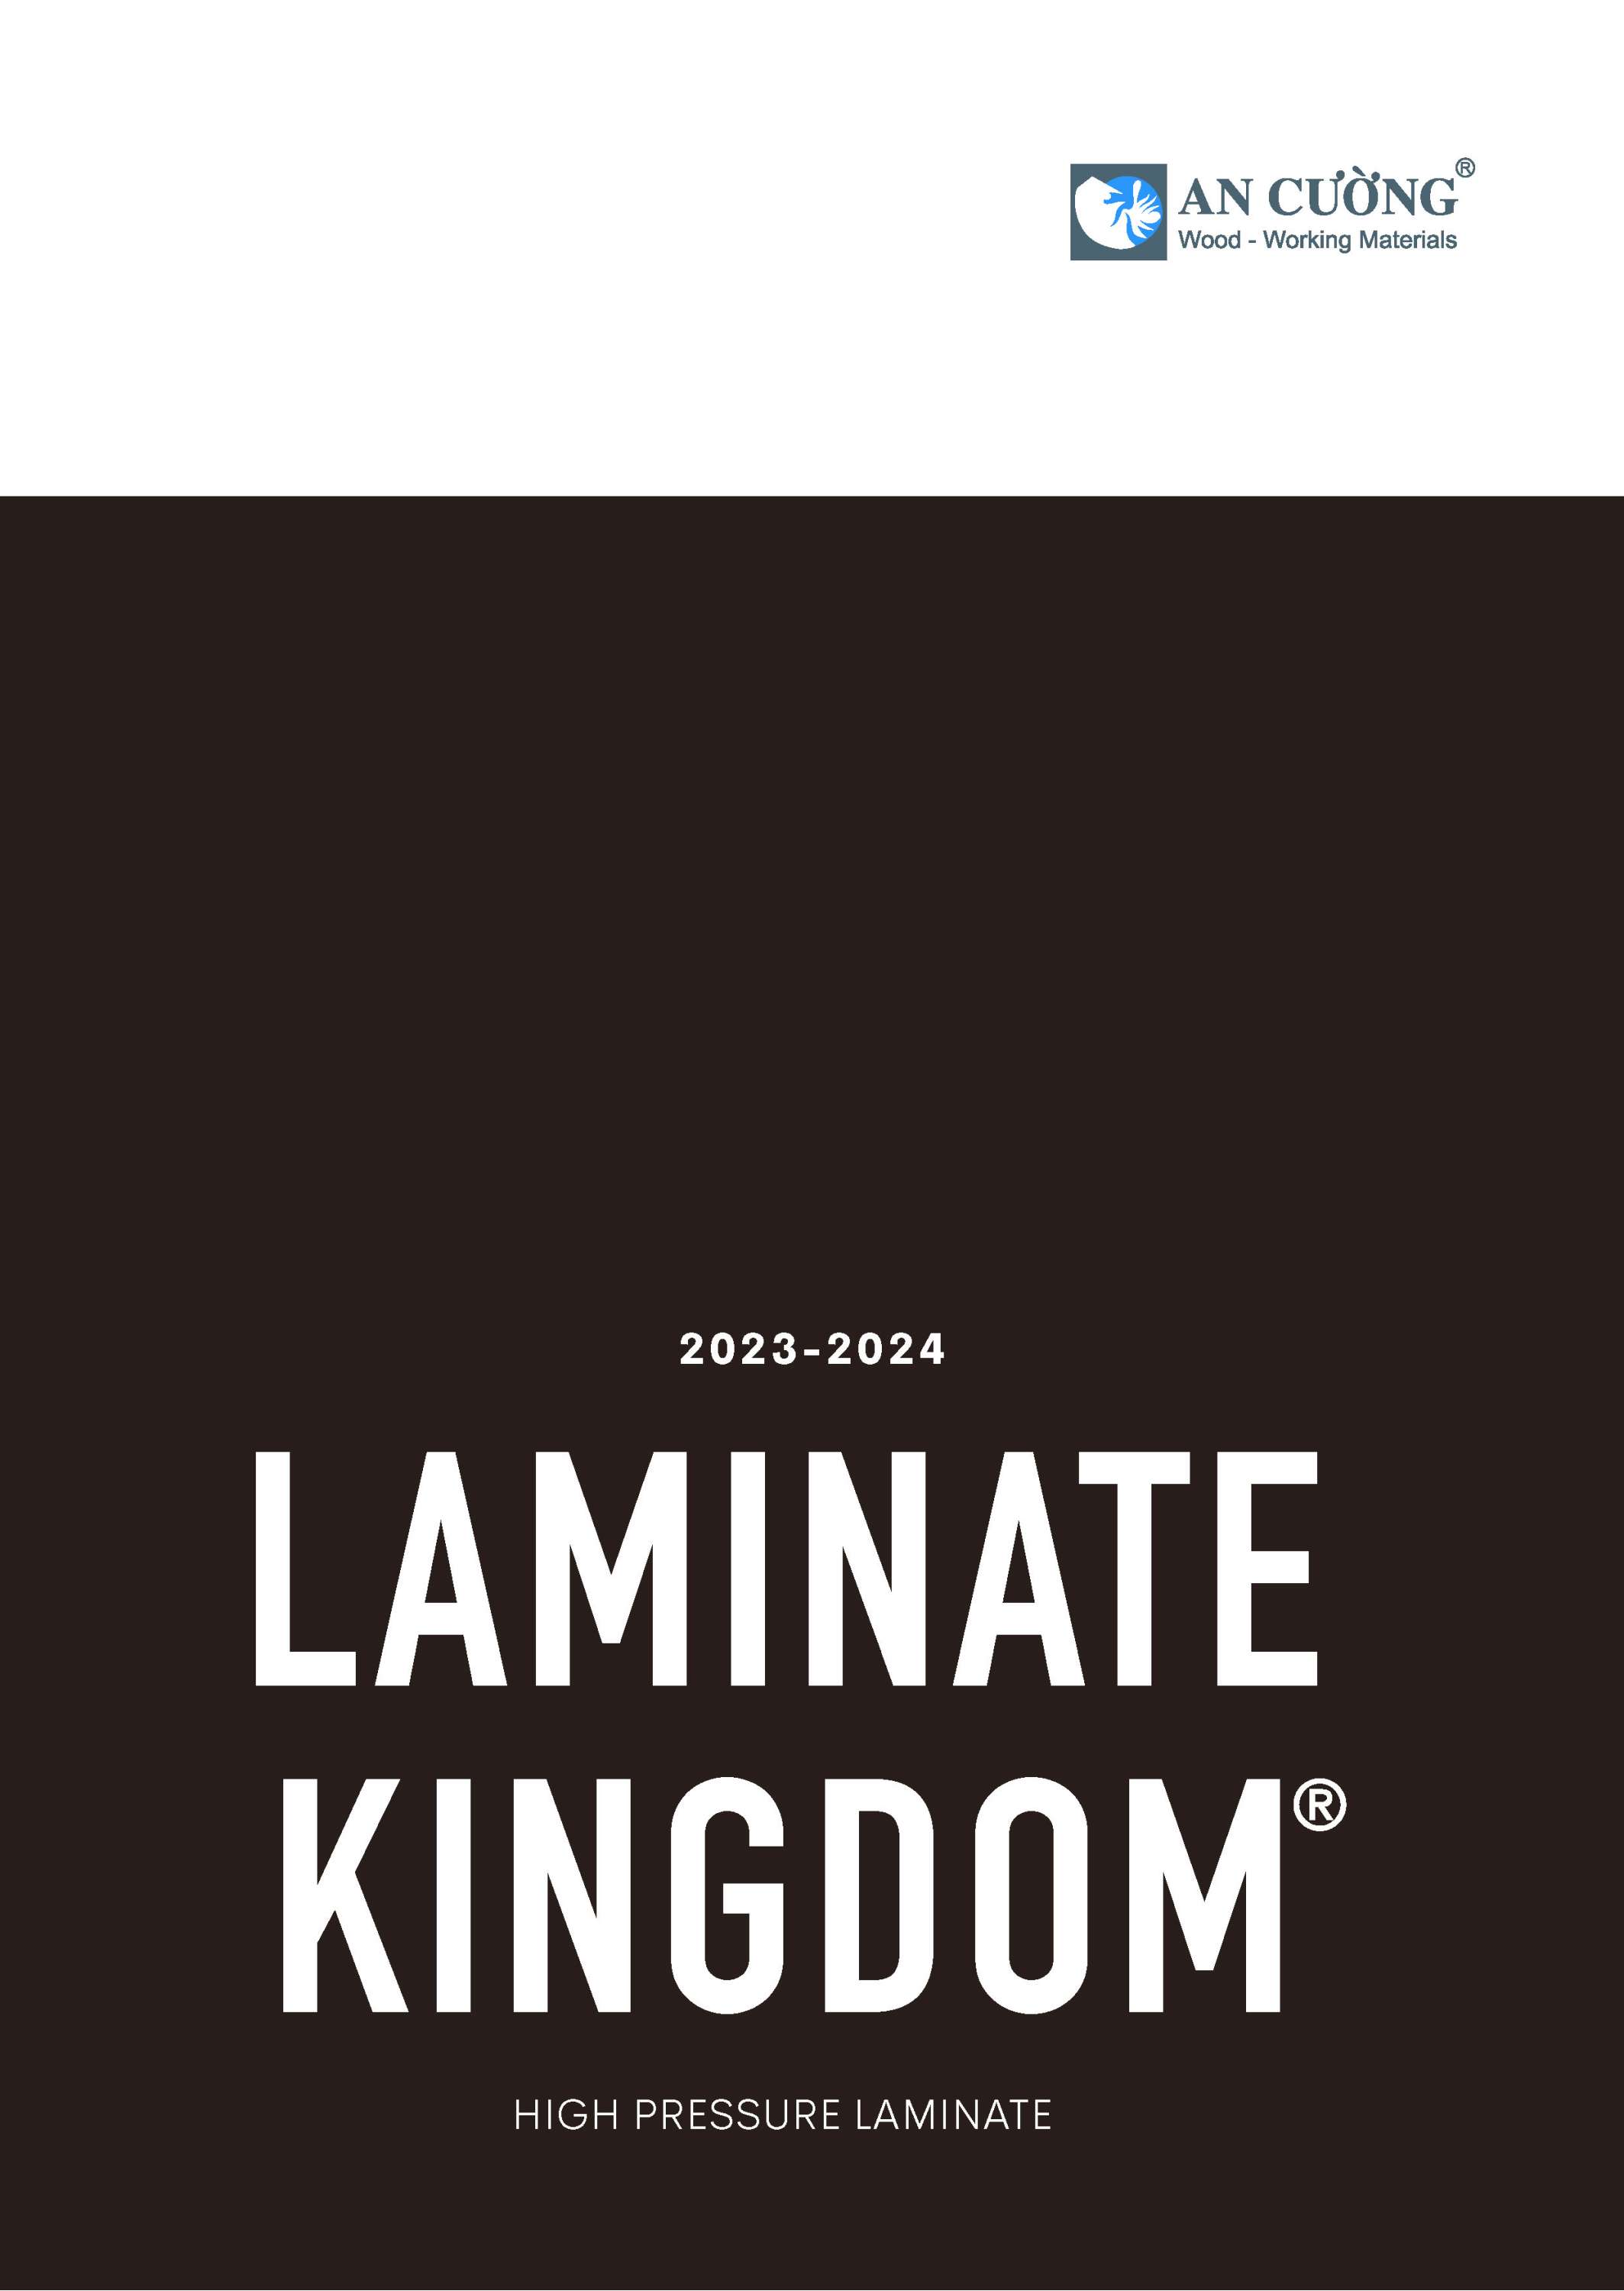 LAMINATE KINGDOM - HIGH PRESSURE LAMINATE